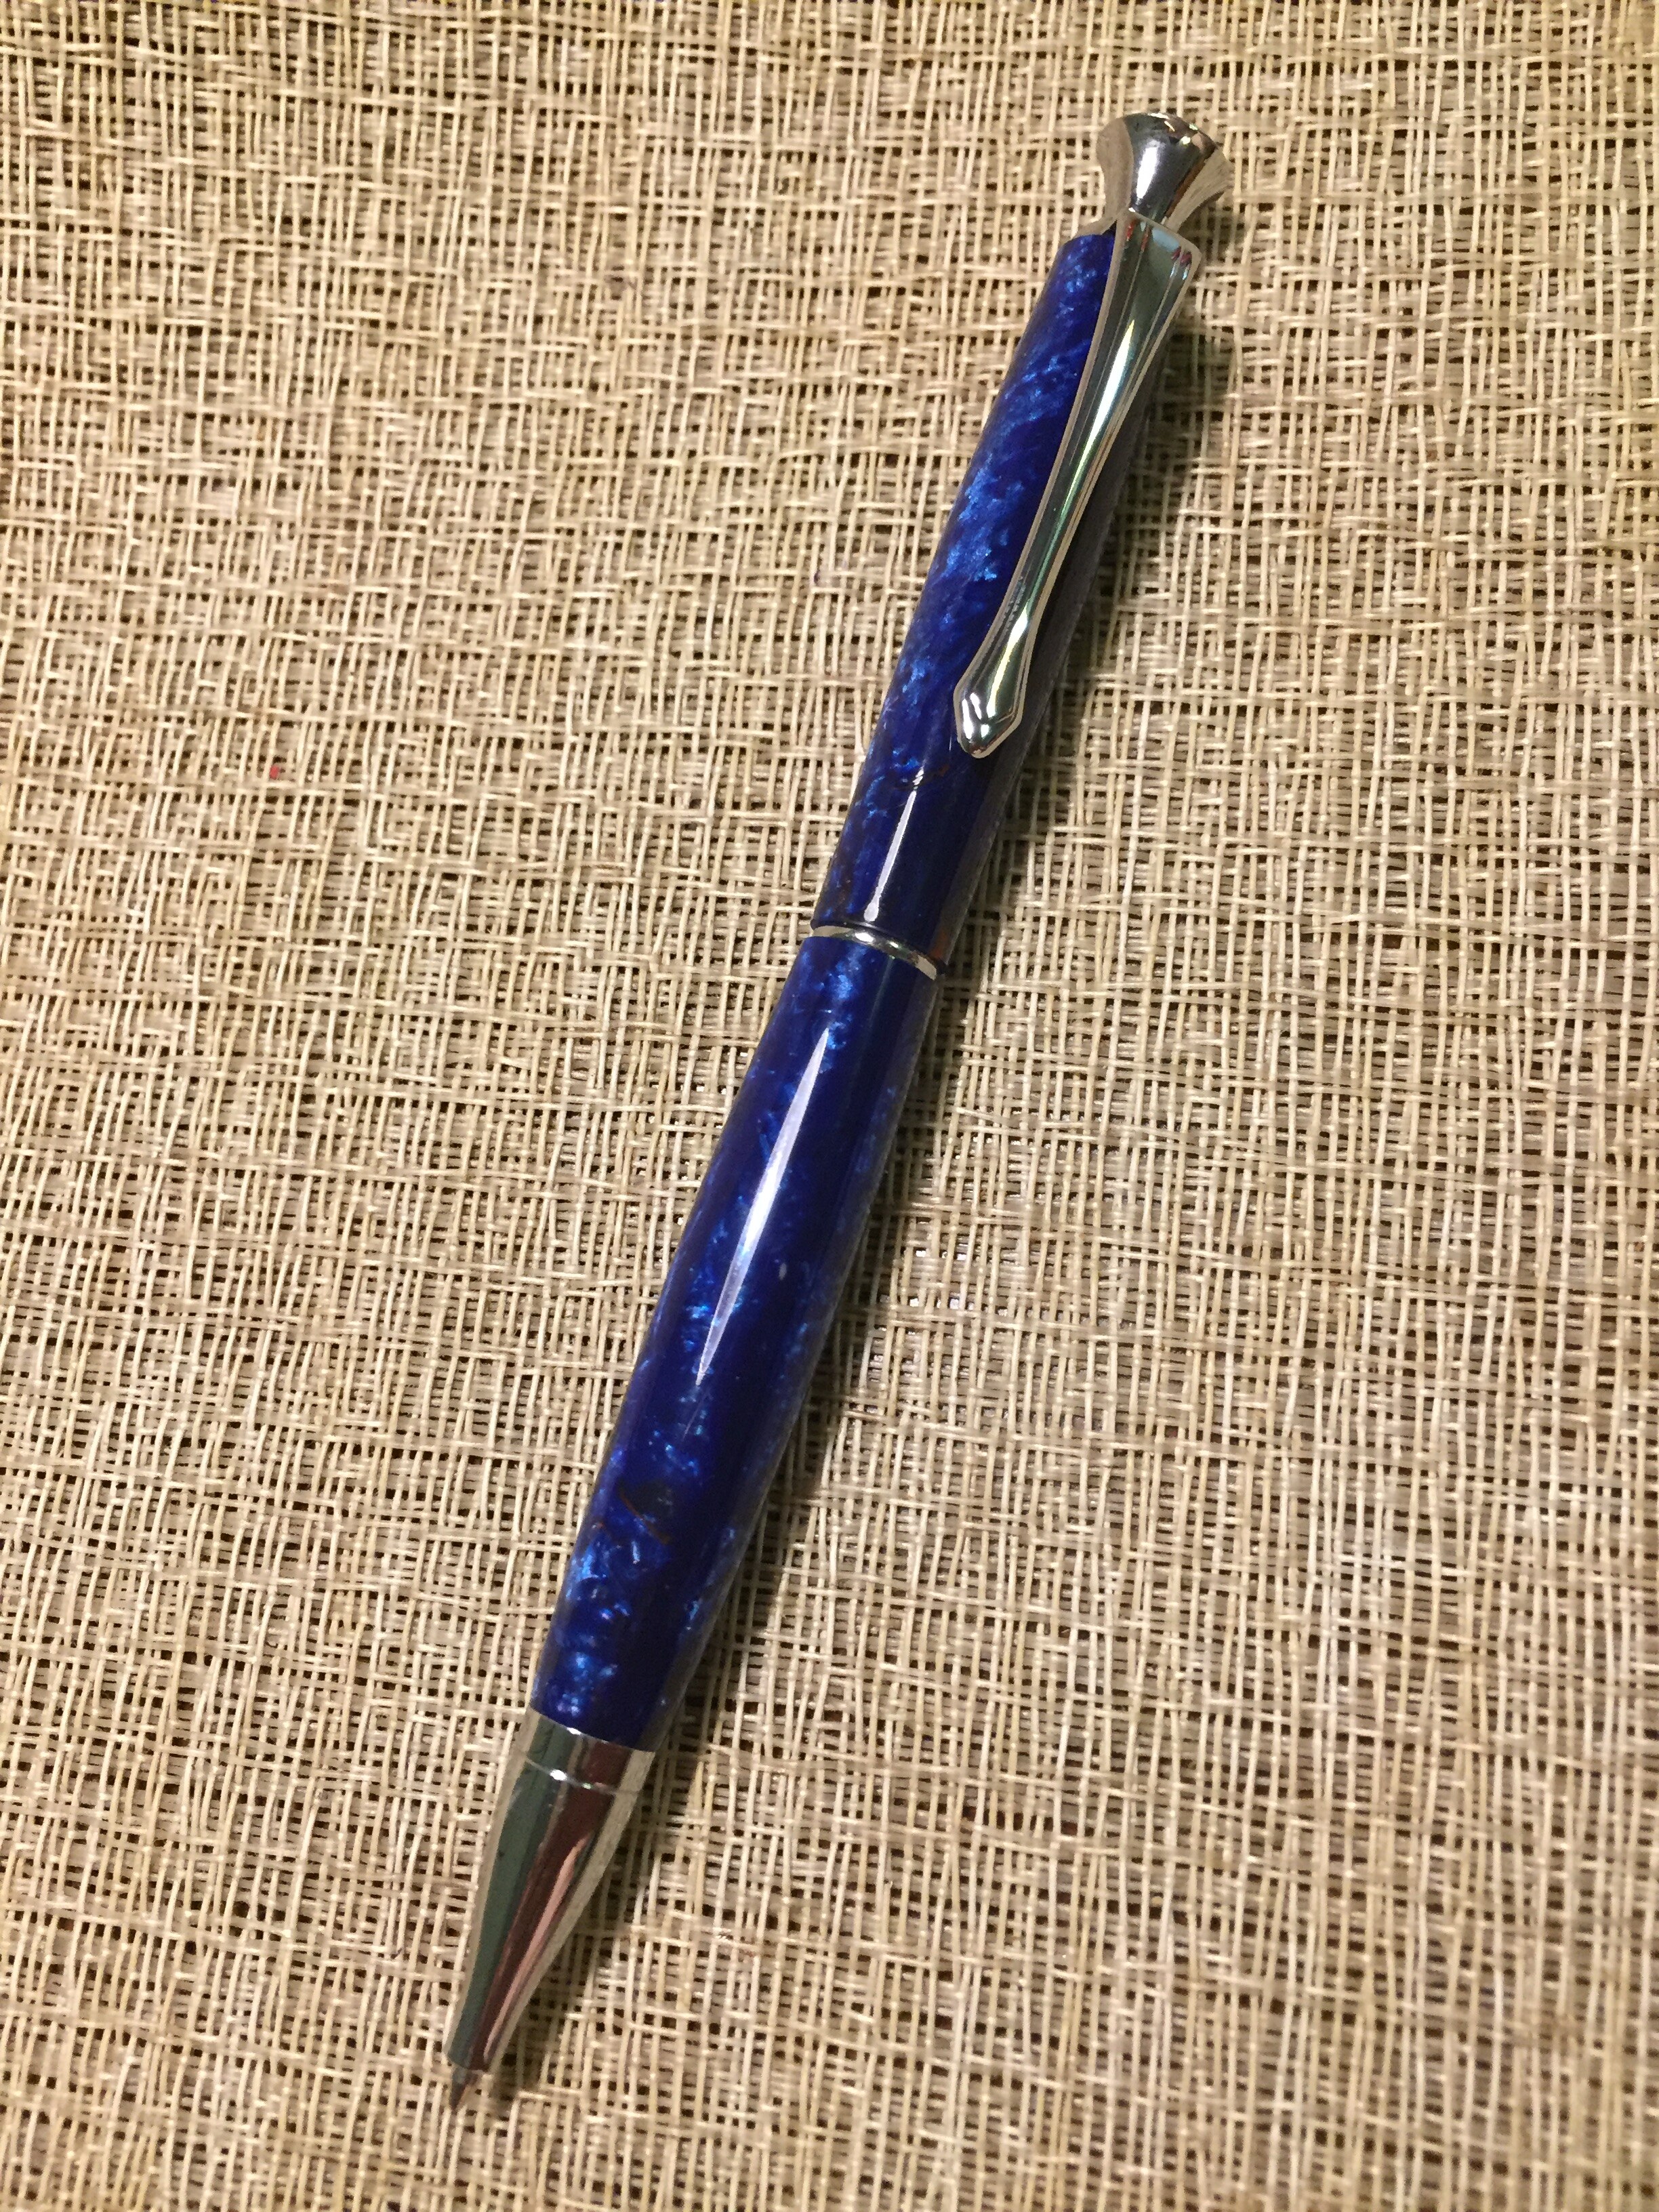 #2 Lady pen kit